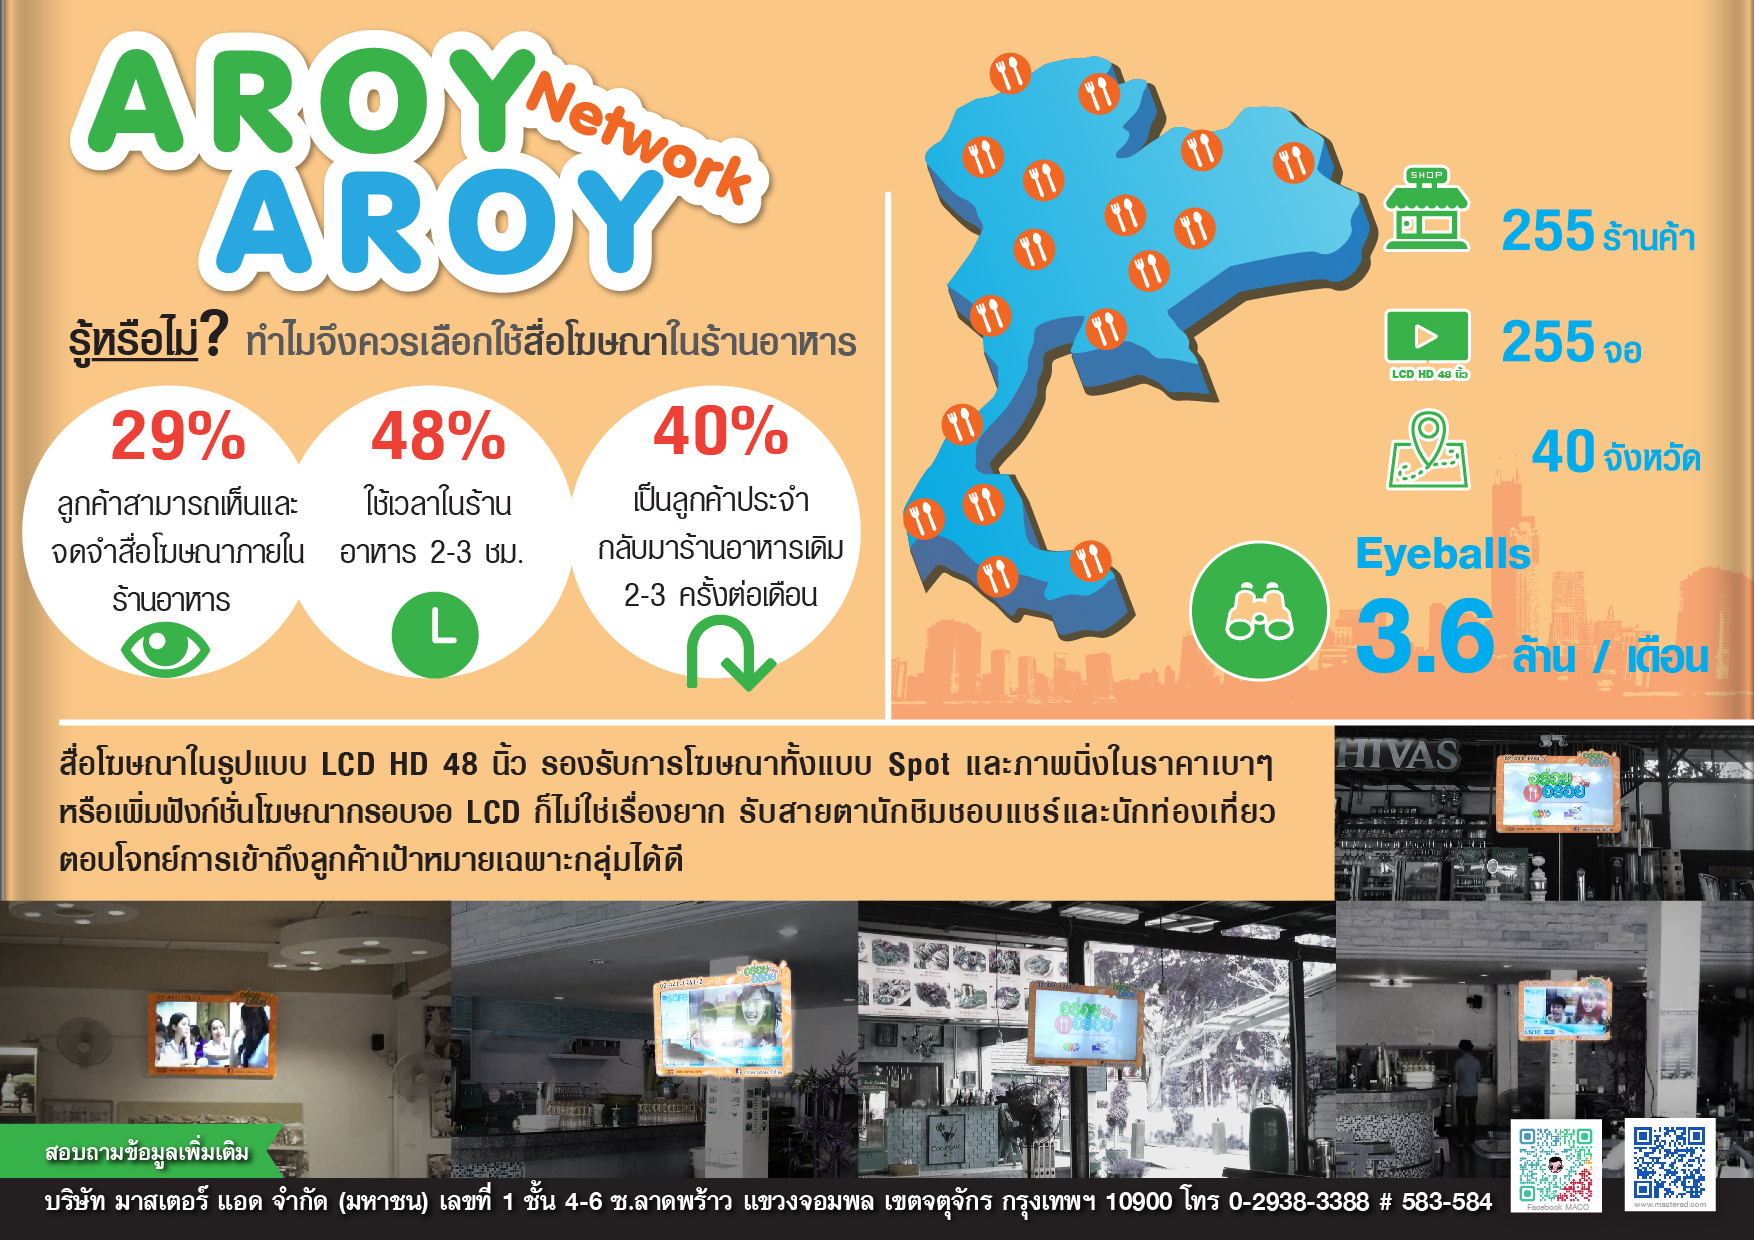 Aroy Aroy Network